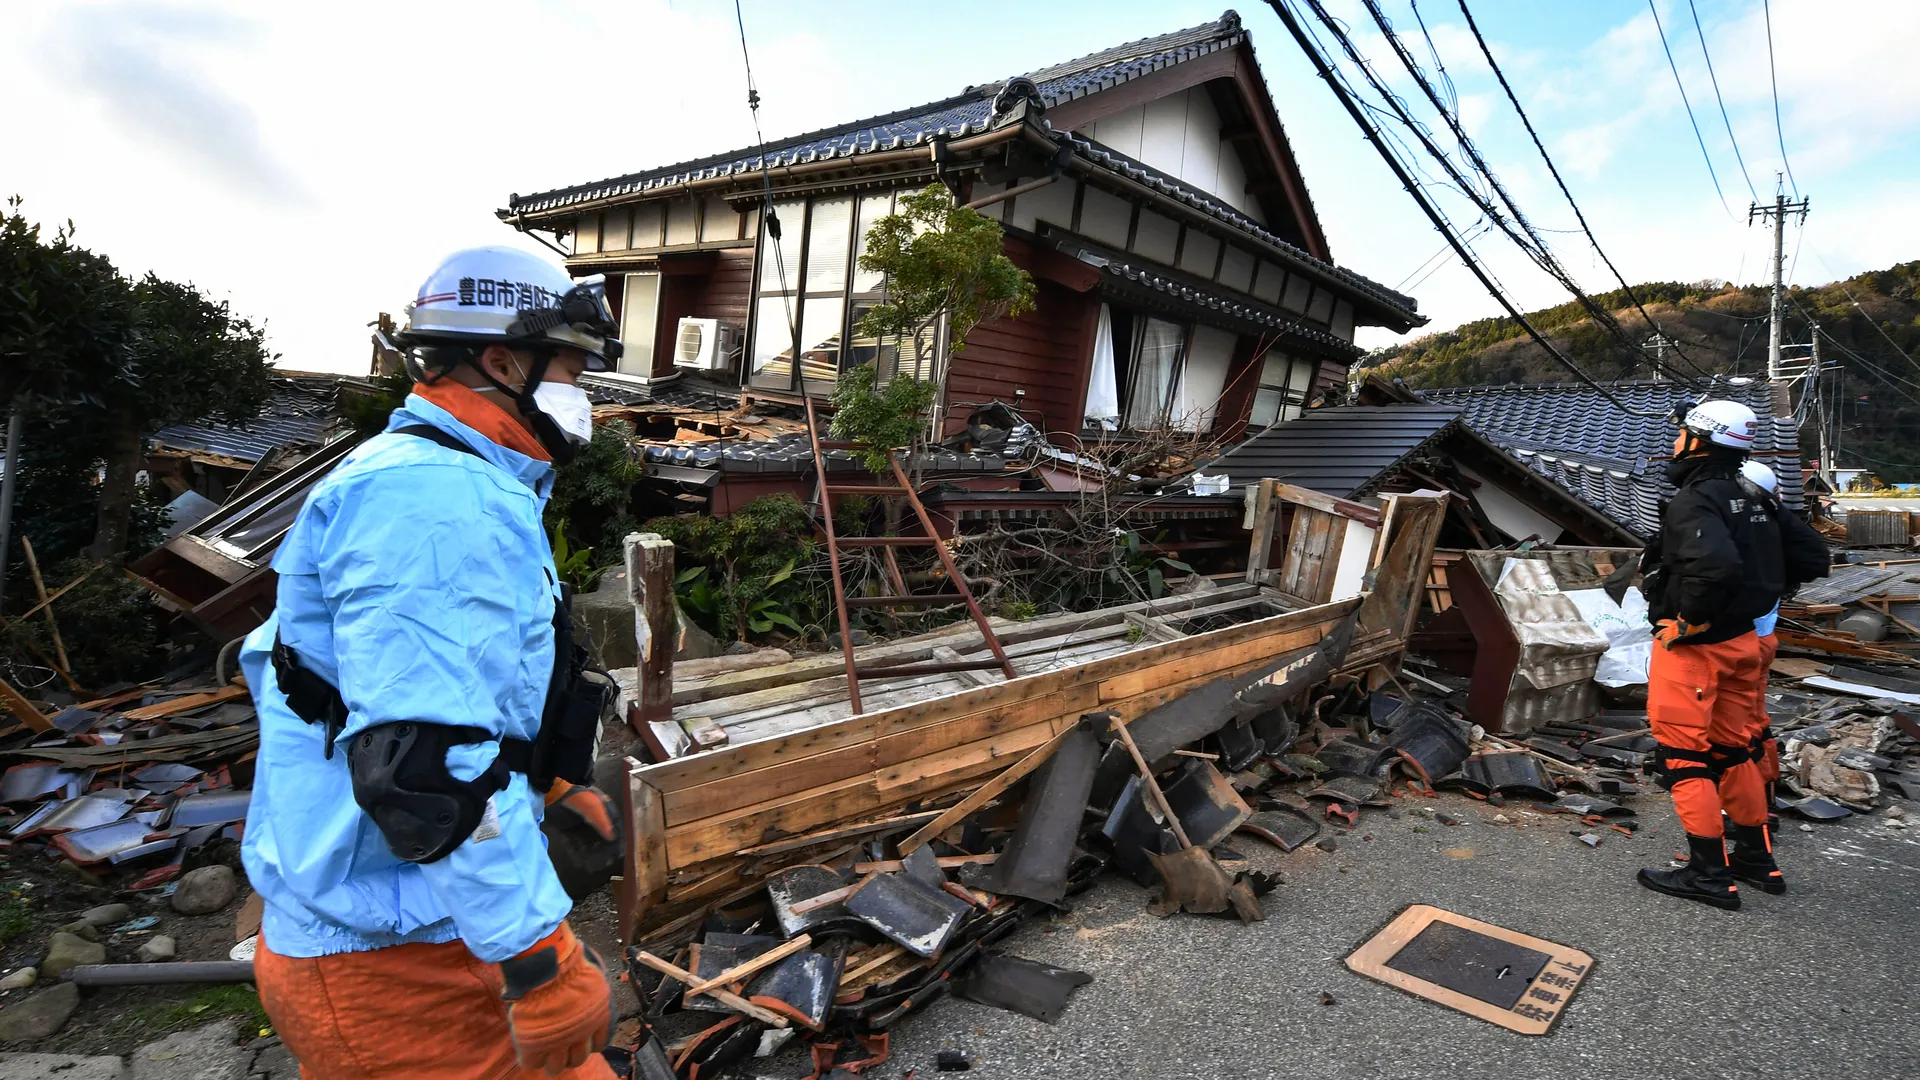 6.1 Magnitude Earthquake Strikes Japan’s Iwate Prefecture